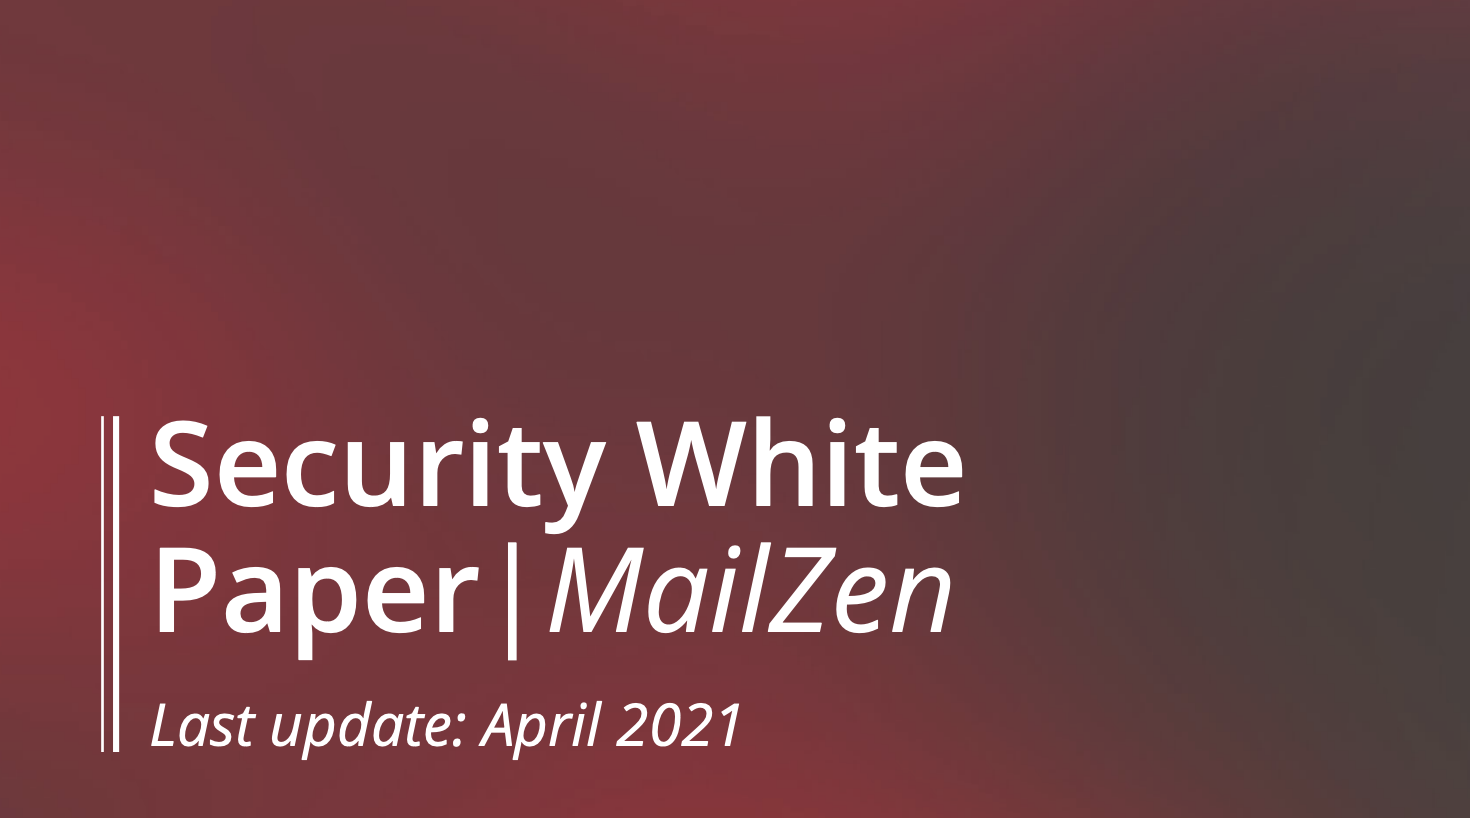 MailZen-Security-Paper-Thumbnail